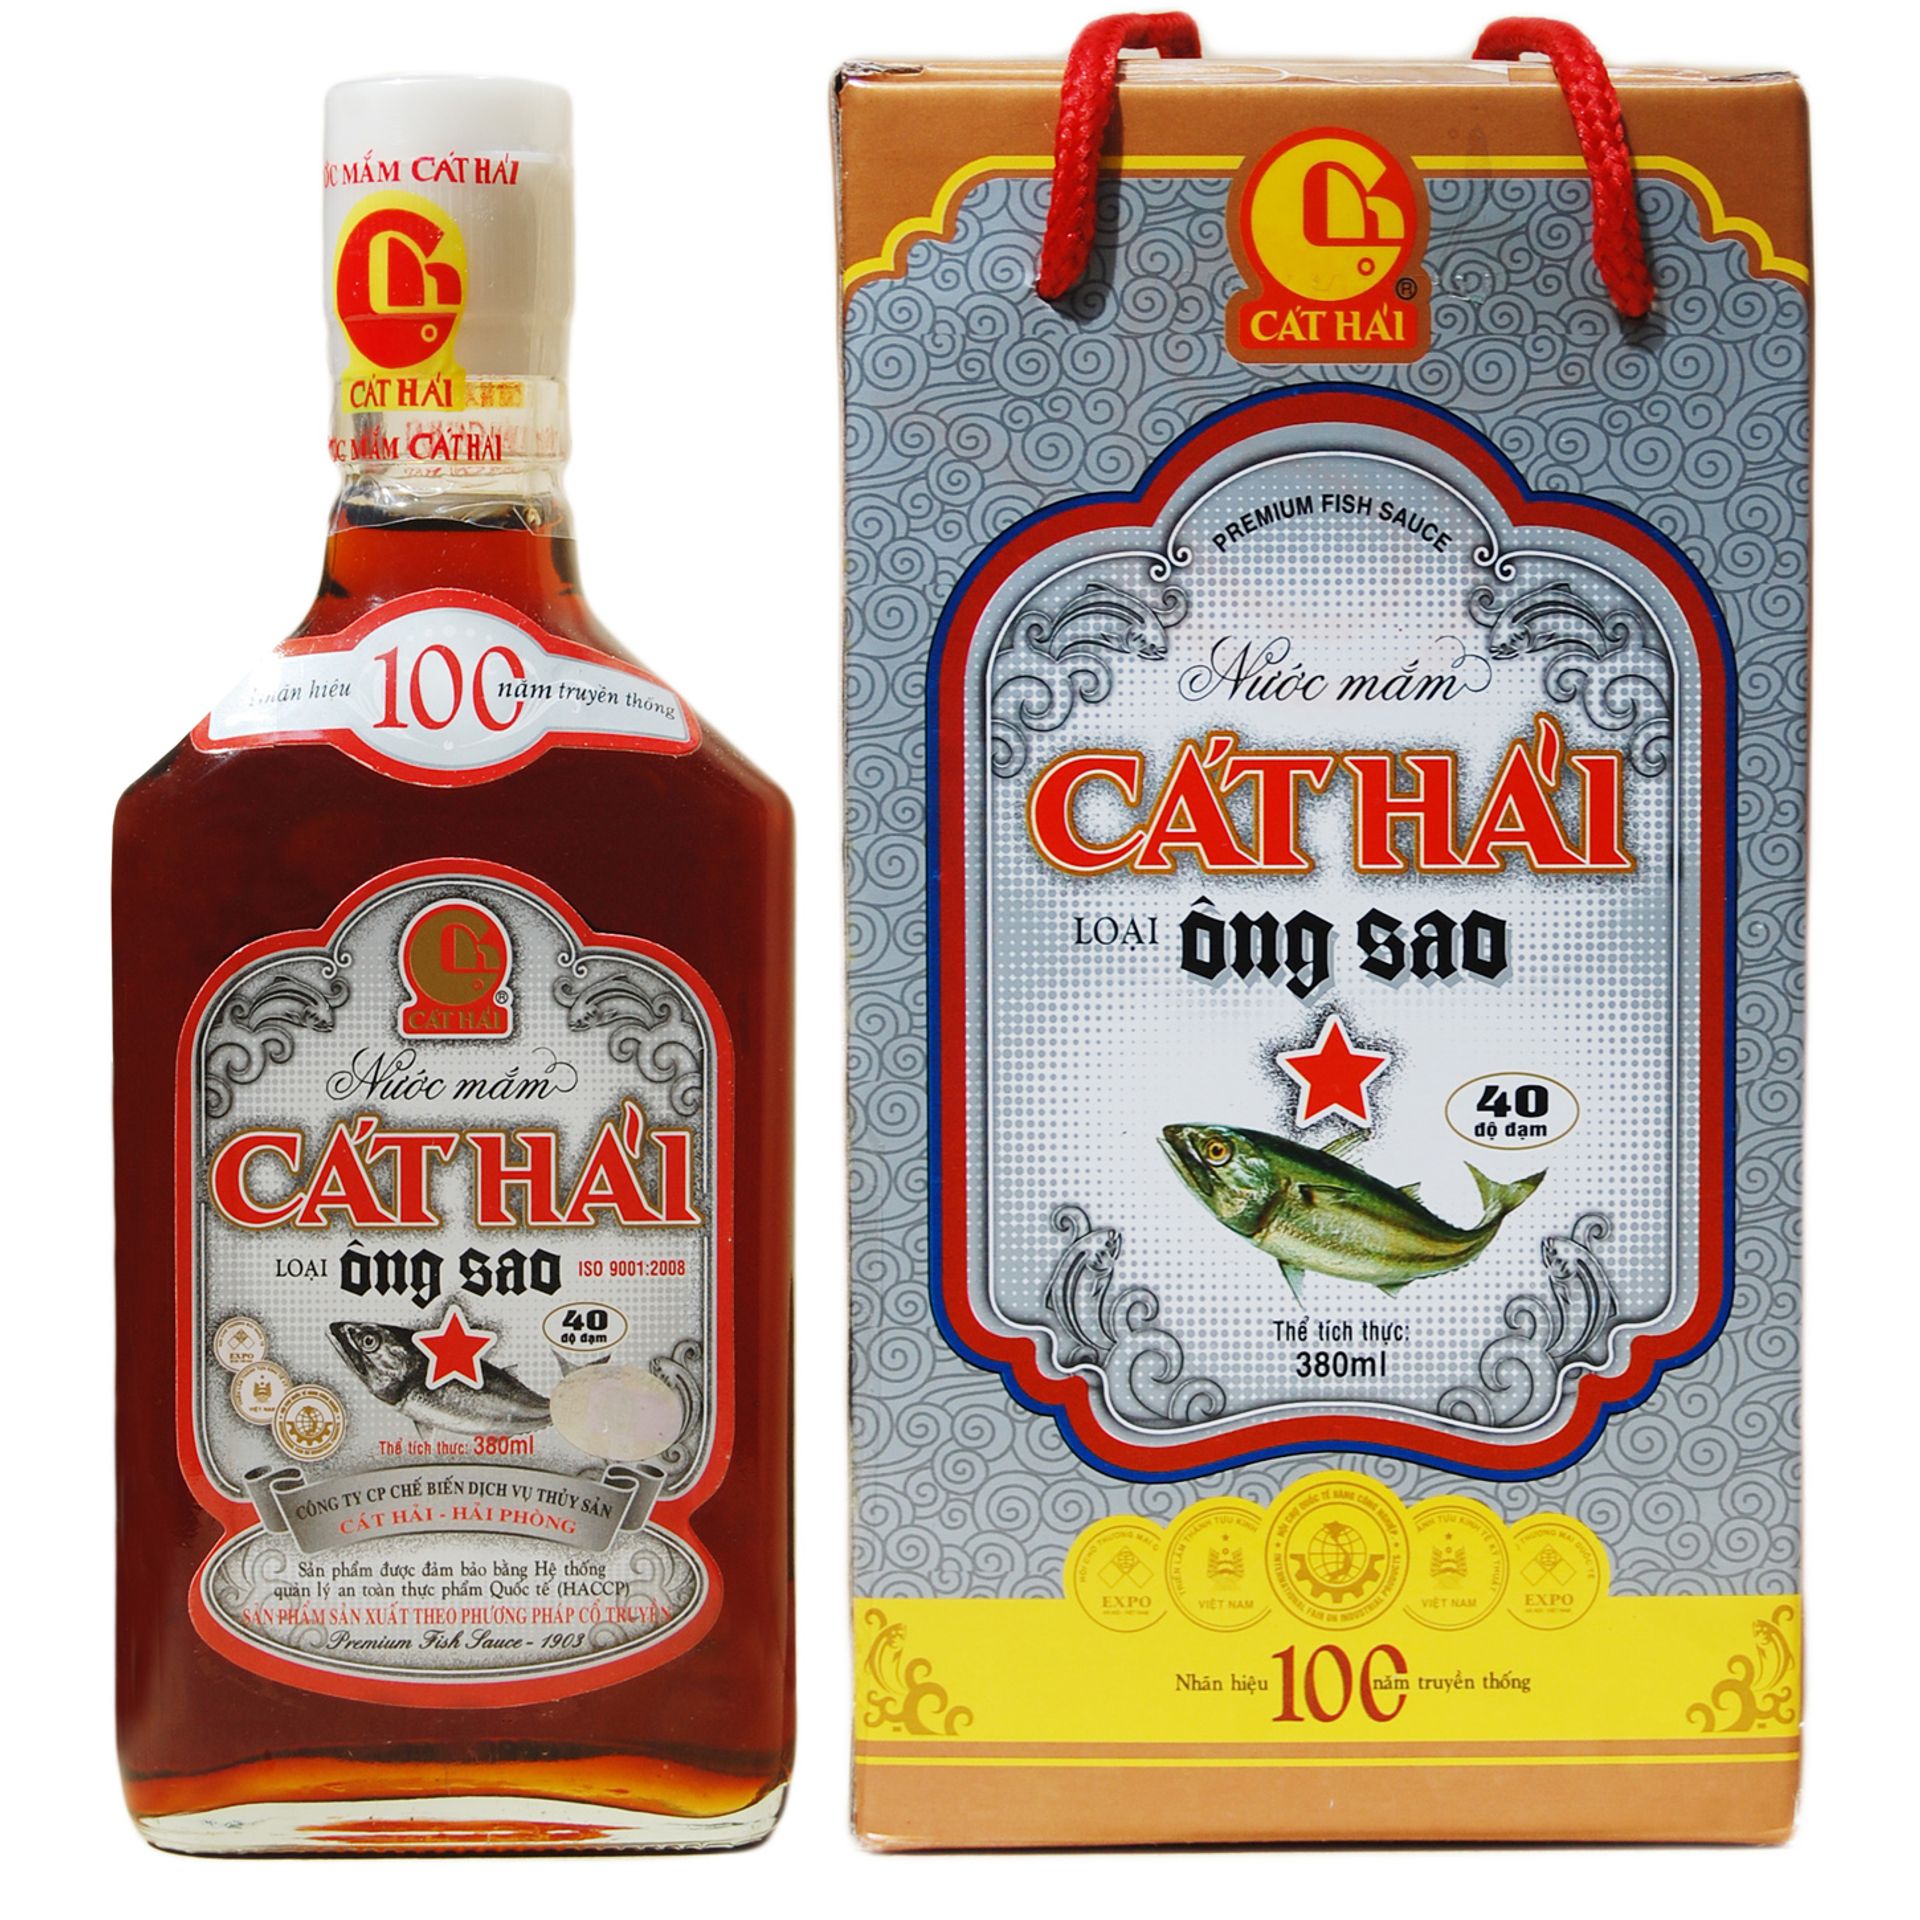 Cat Hai fish sauce as a gift